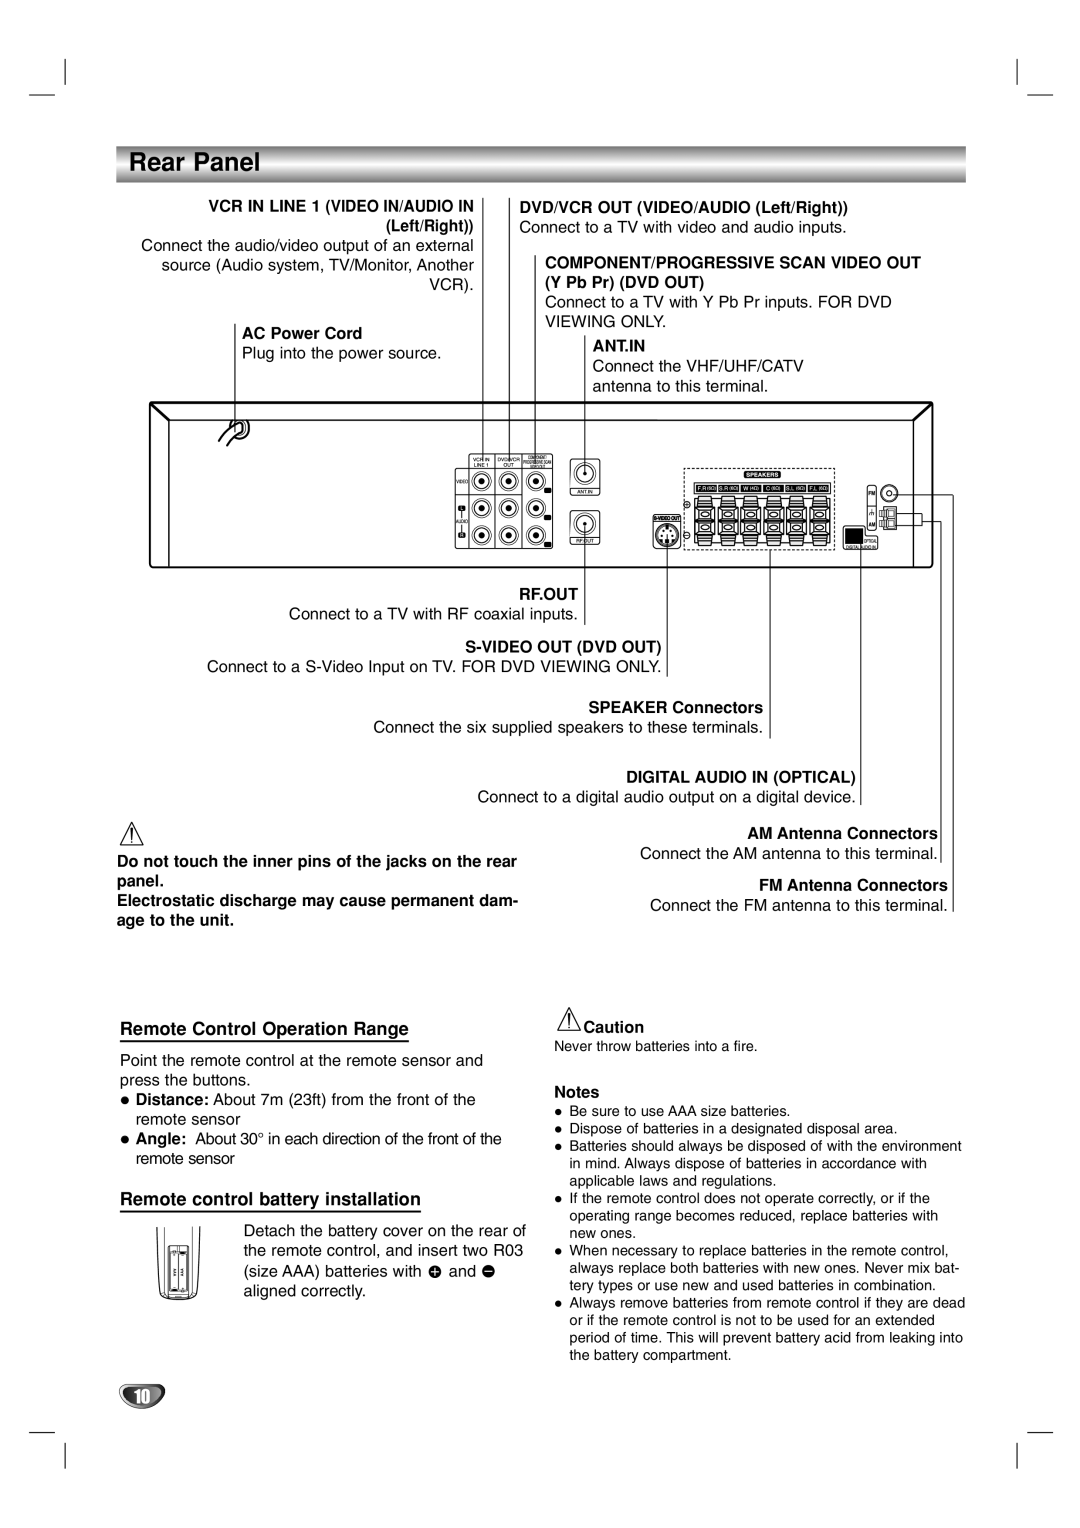 Toshiba SD-V57HTSU owner manual Rear Panel, Remote Control Operation Range, Remote control battery installation 